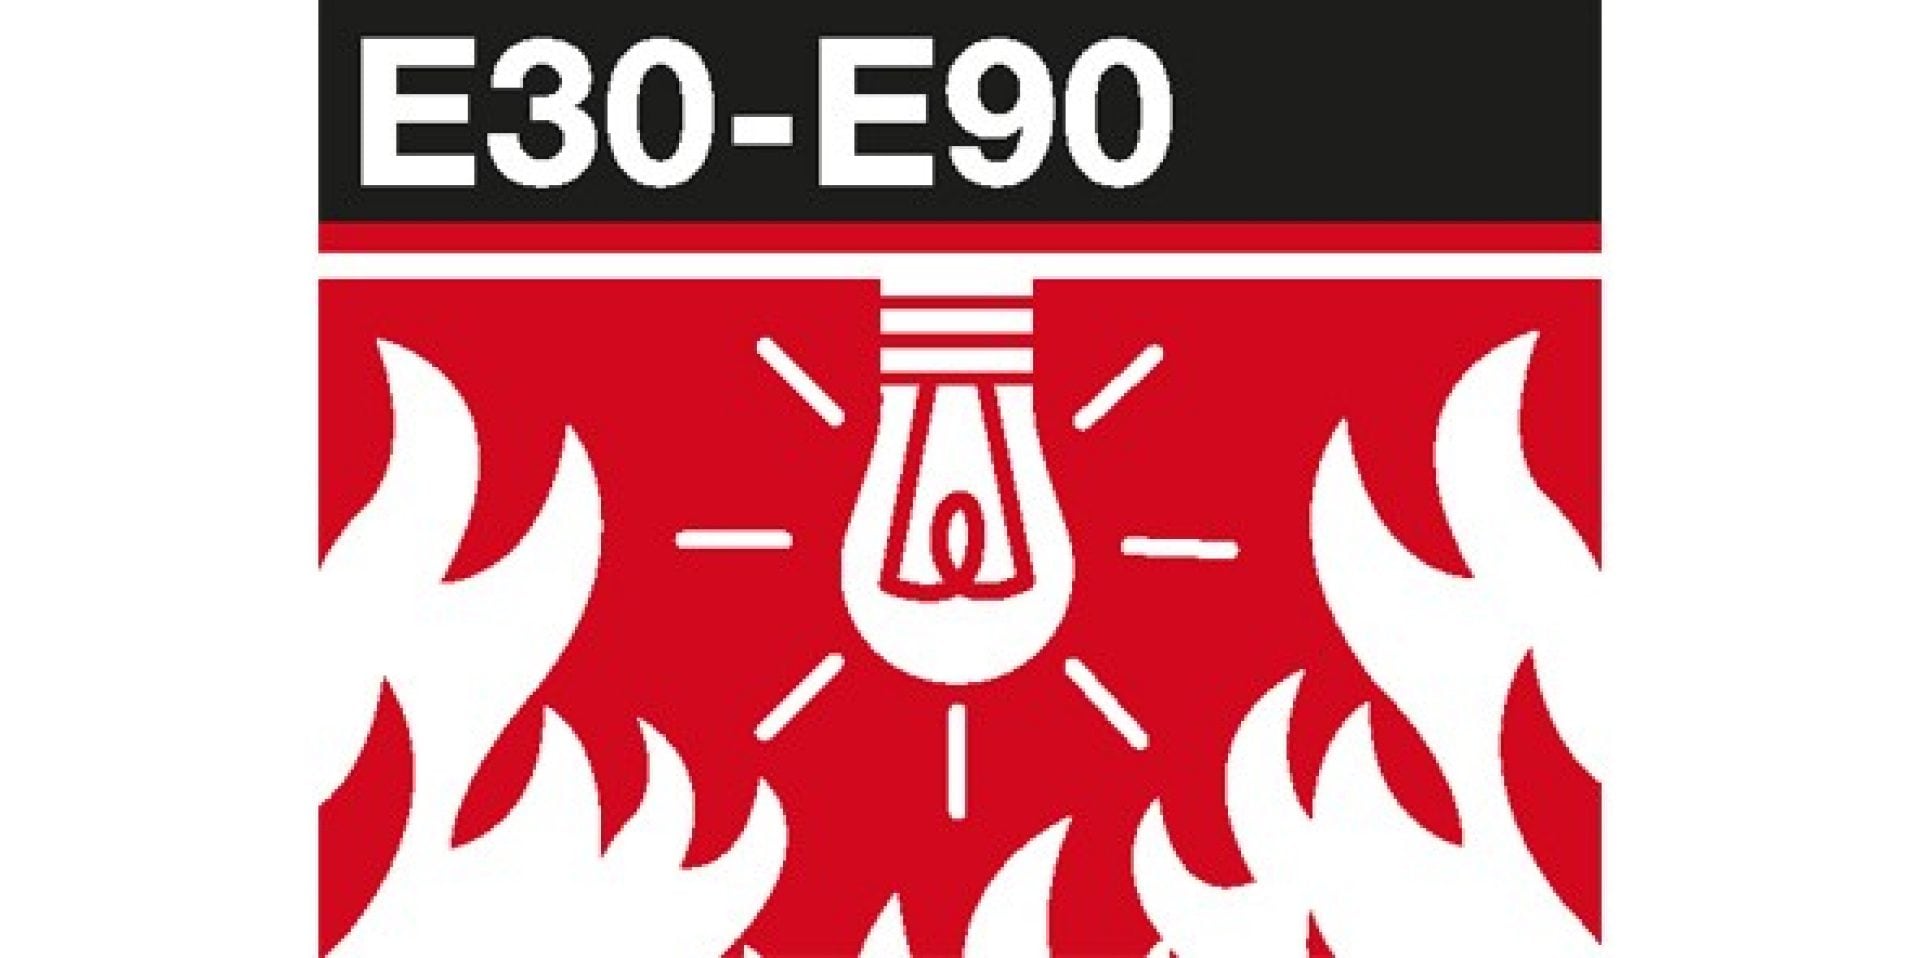 E30-E90 logo for circuit integrity according to DIN 4102-qw